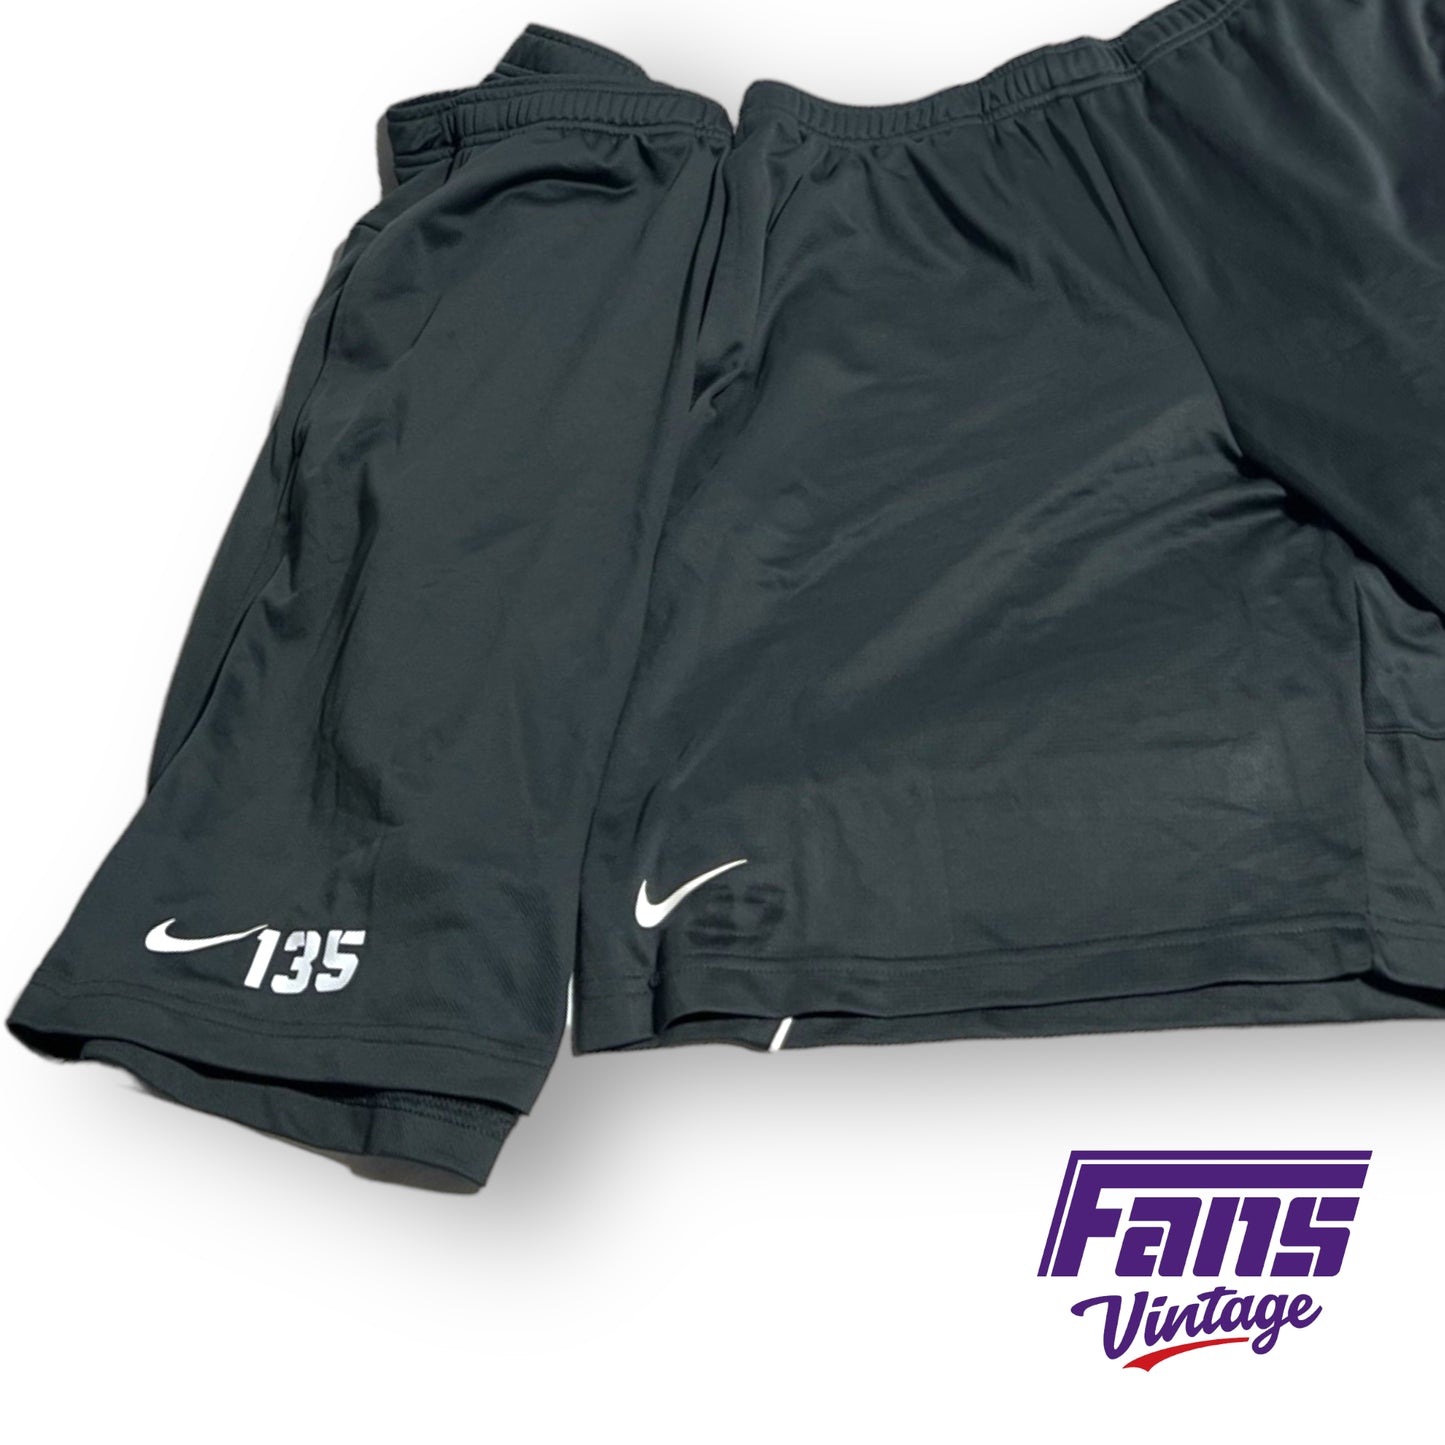 Nike TCU team issued dri-fit shorts - Anthracite Dark Gray